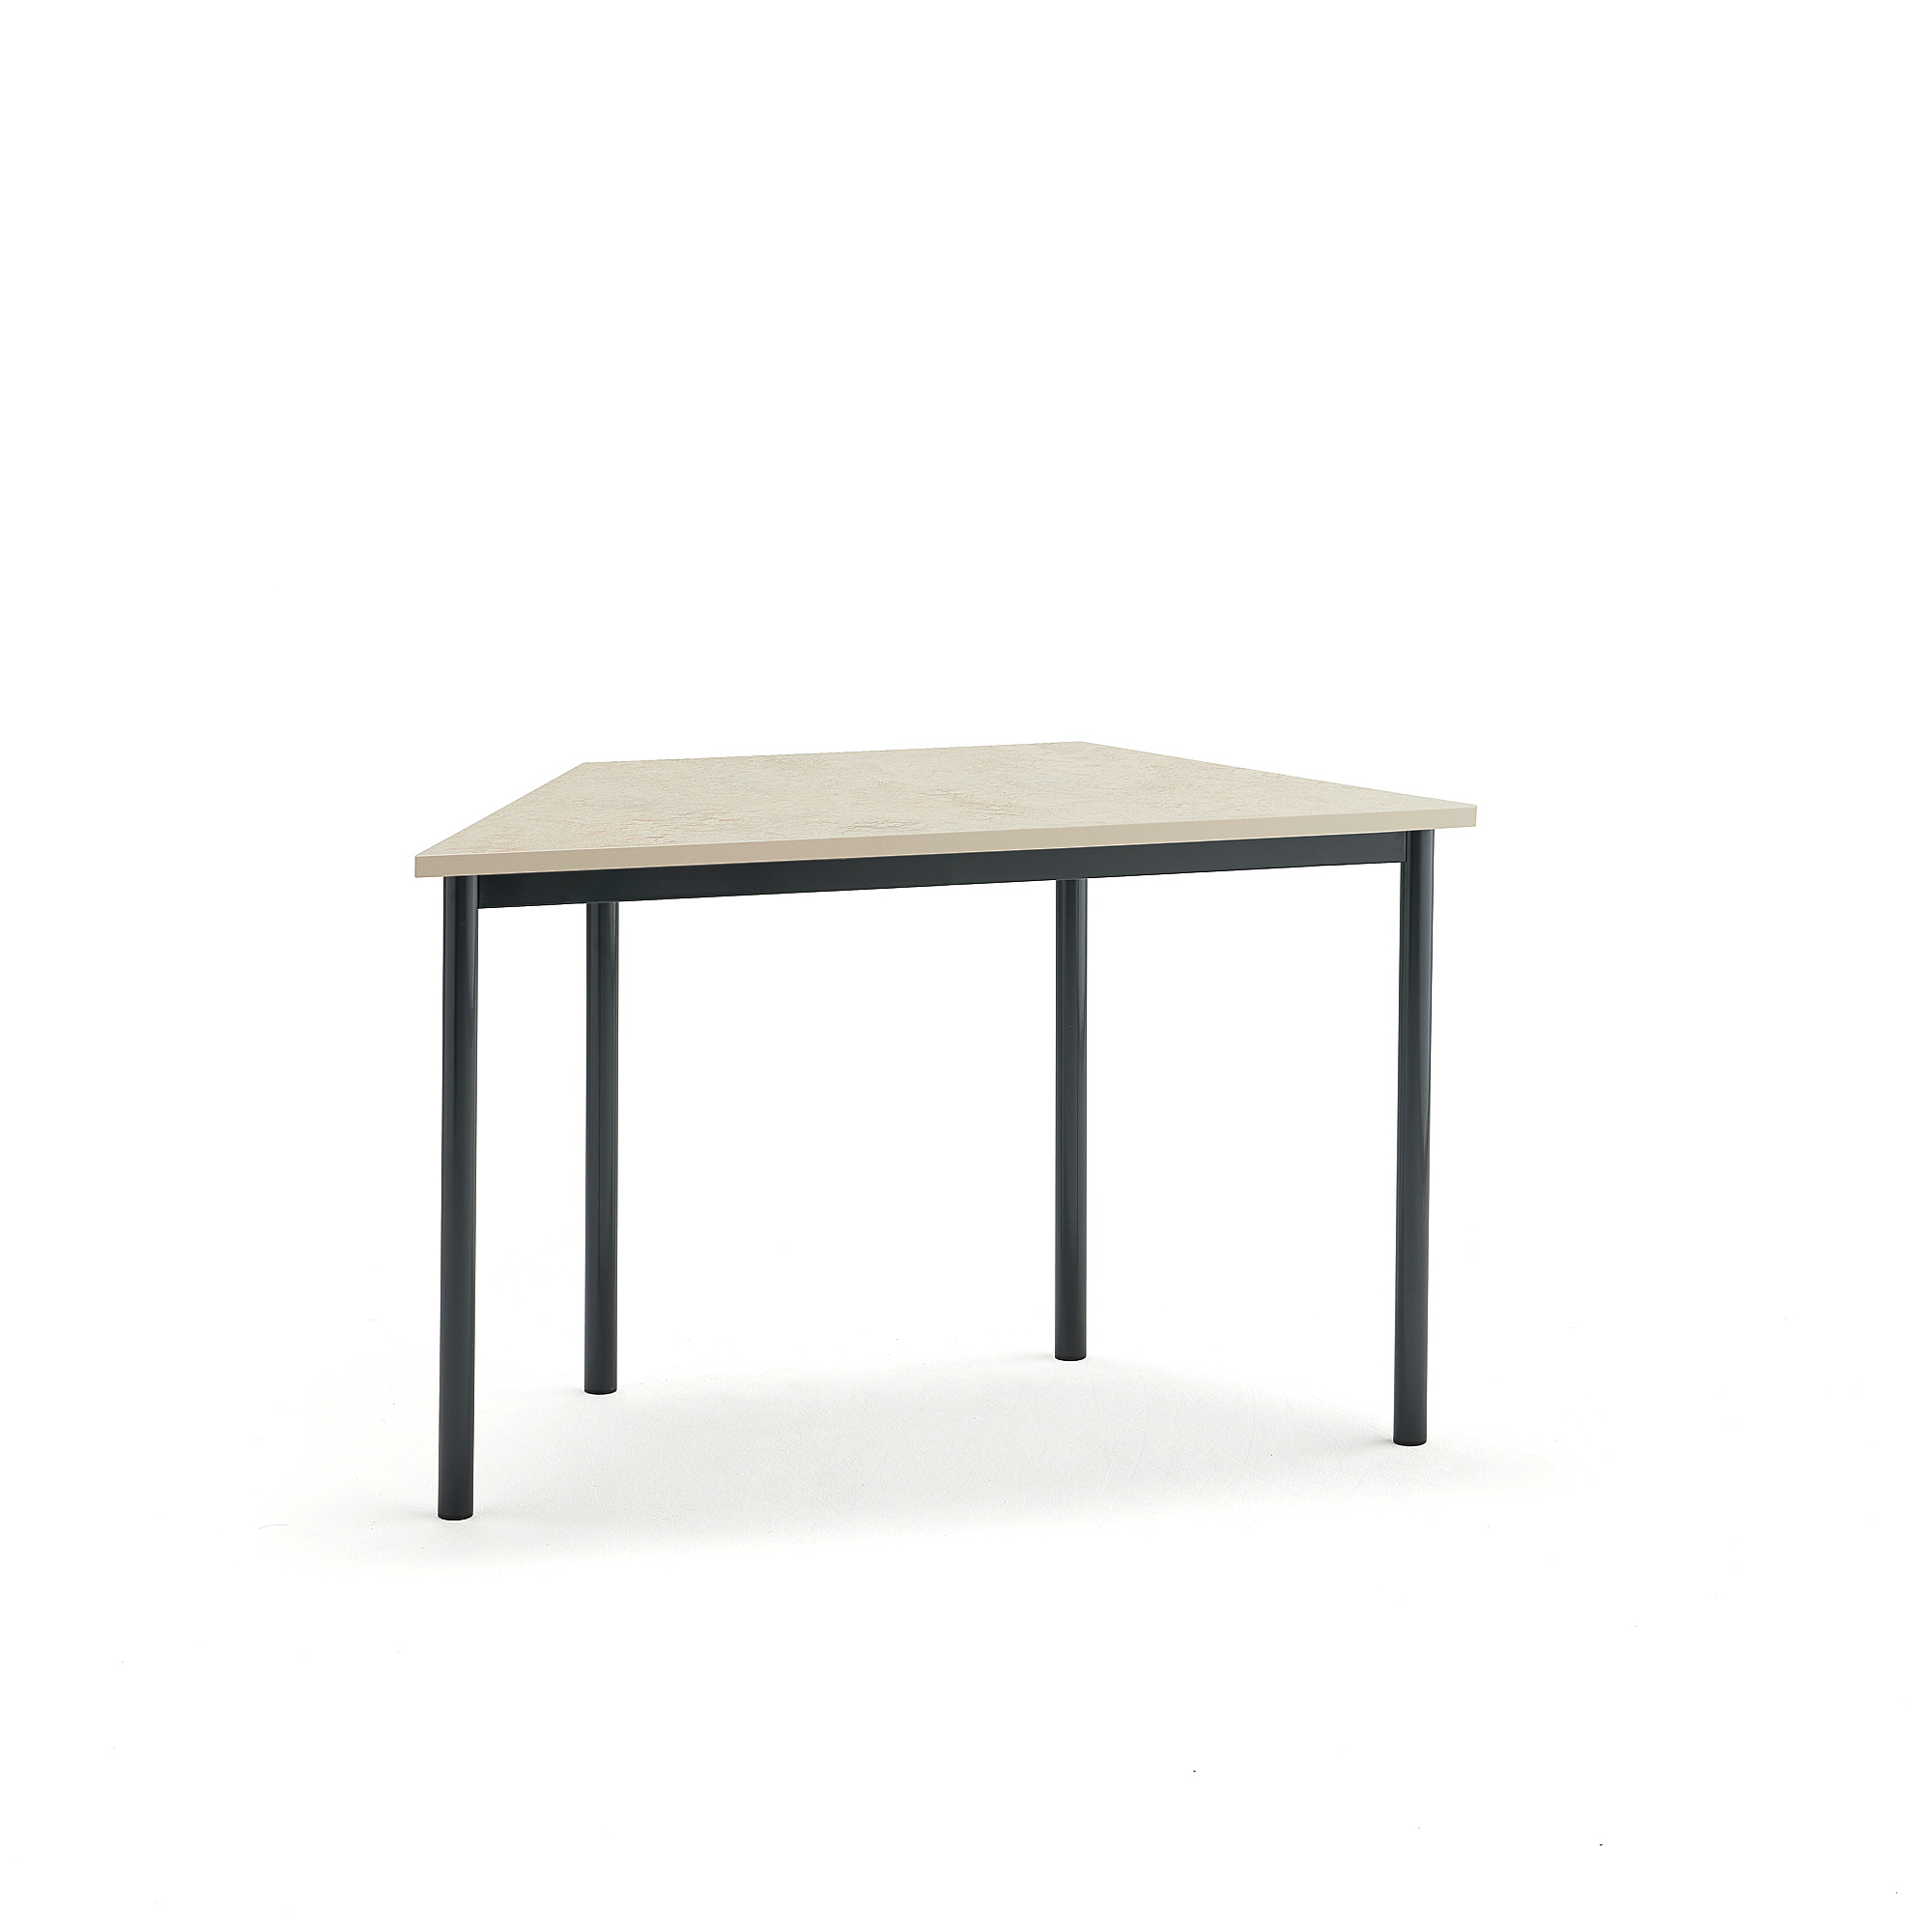 Stůl SONITUS TRAPETS, 1200x600x720 mm, antracitově šedé nohy, deska s linoleem, béžová